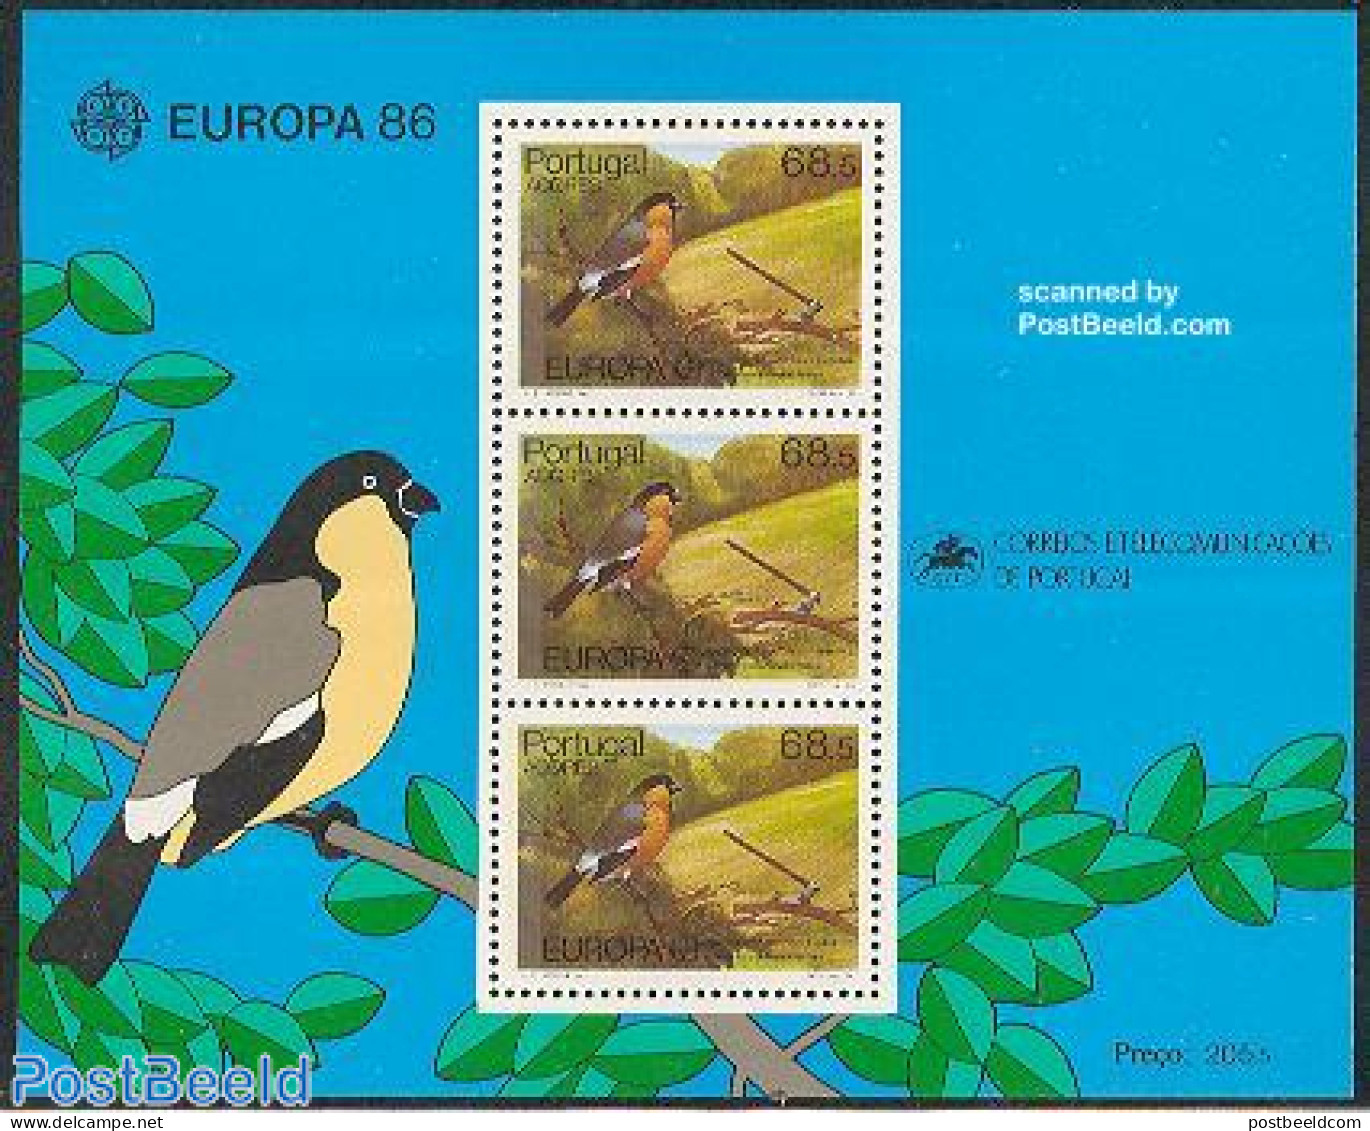 Azores 1986 Europa, Environment, Bird S/s, Mint NH, History - Nature - Europa (cept) - Birds - Environment - Protection De L'environnement & Climat